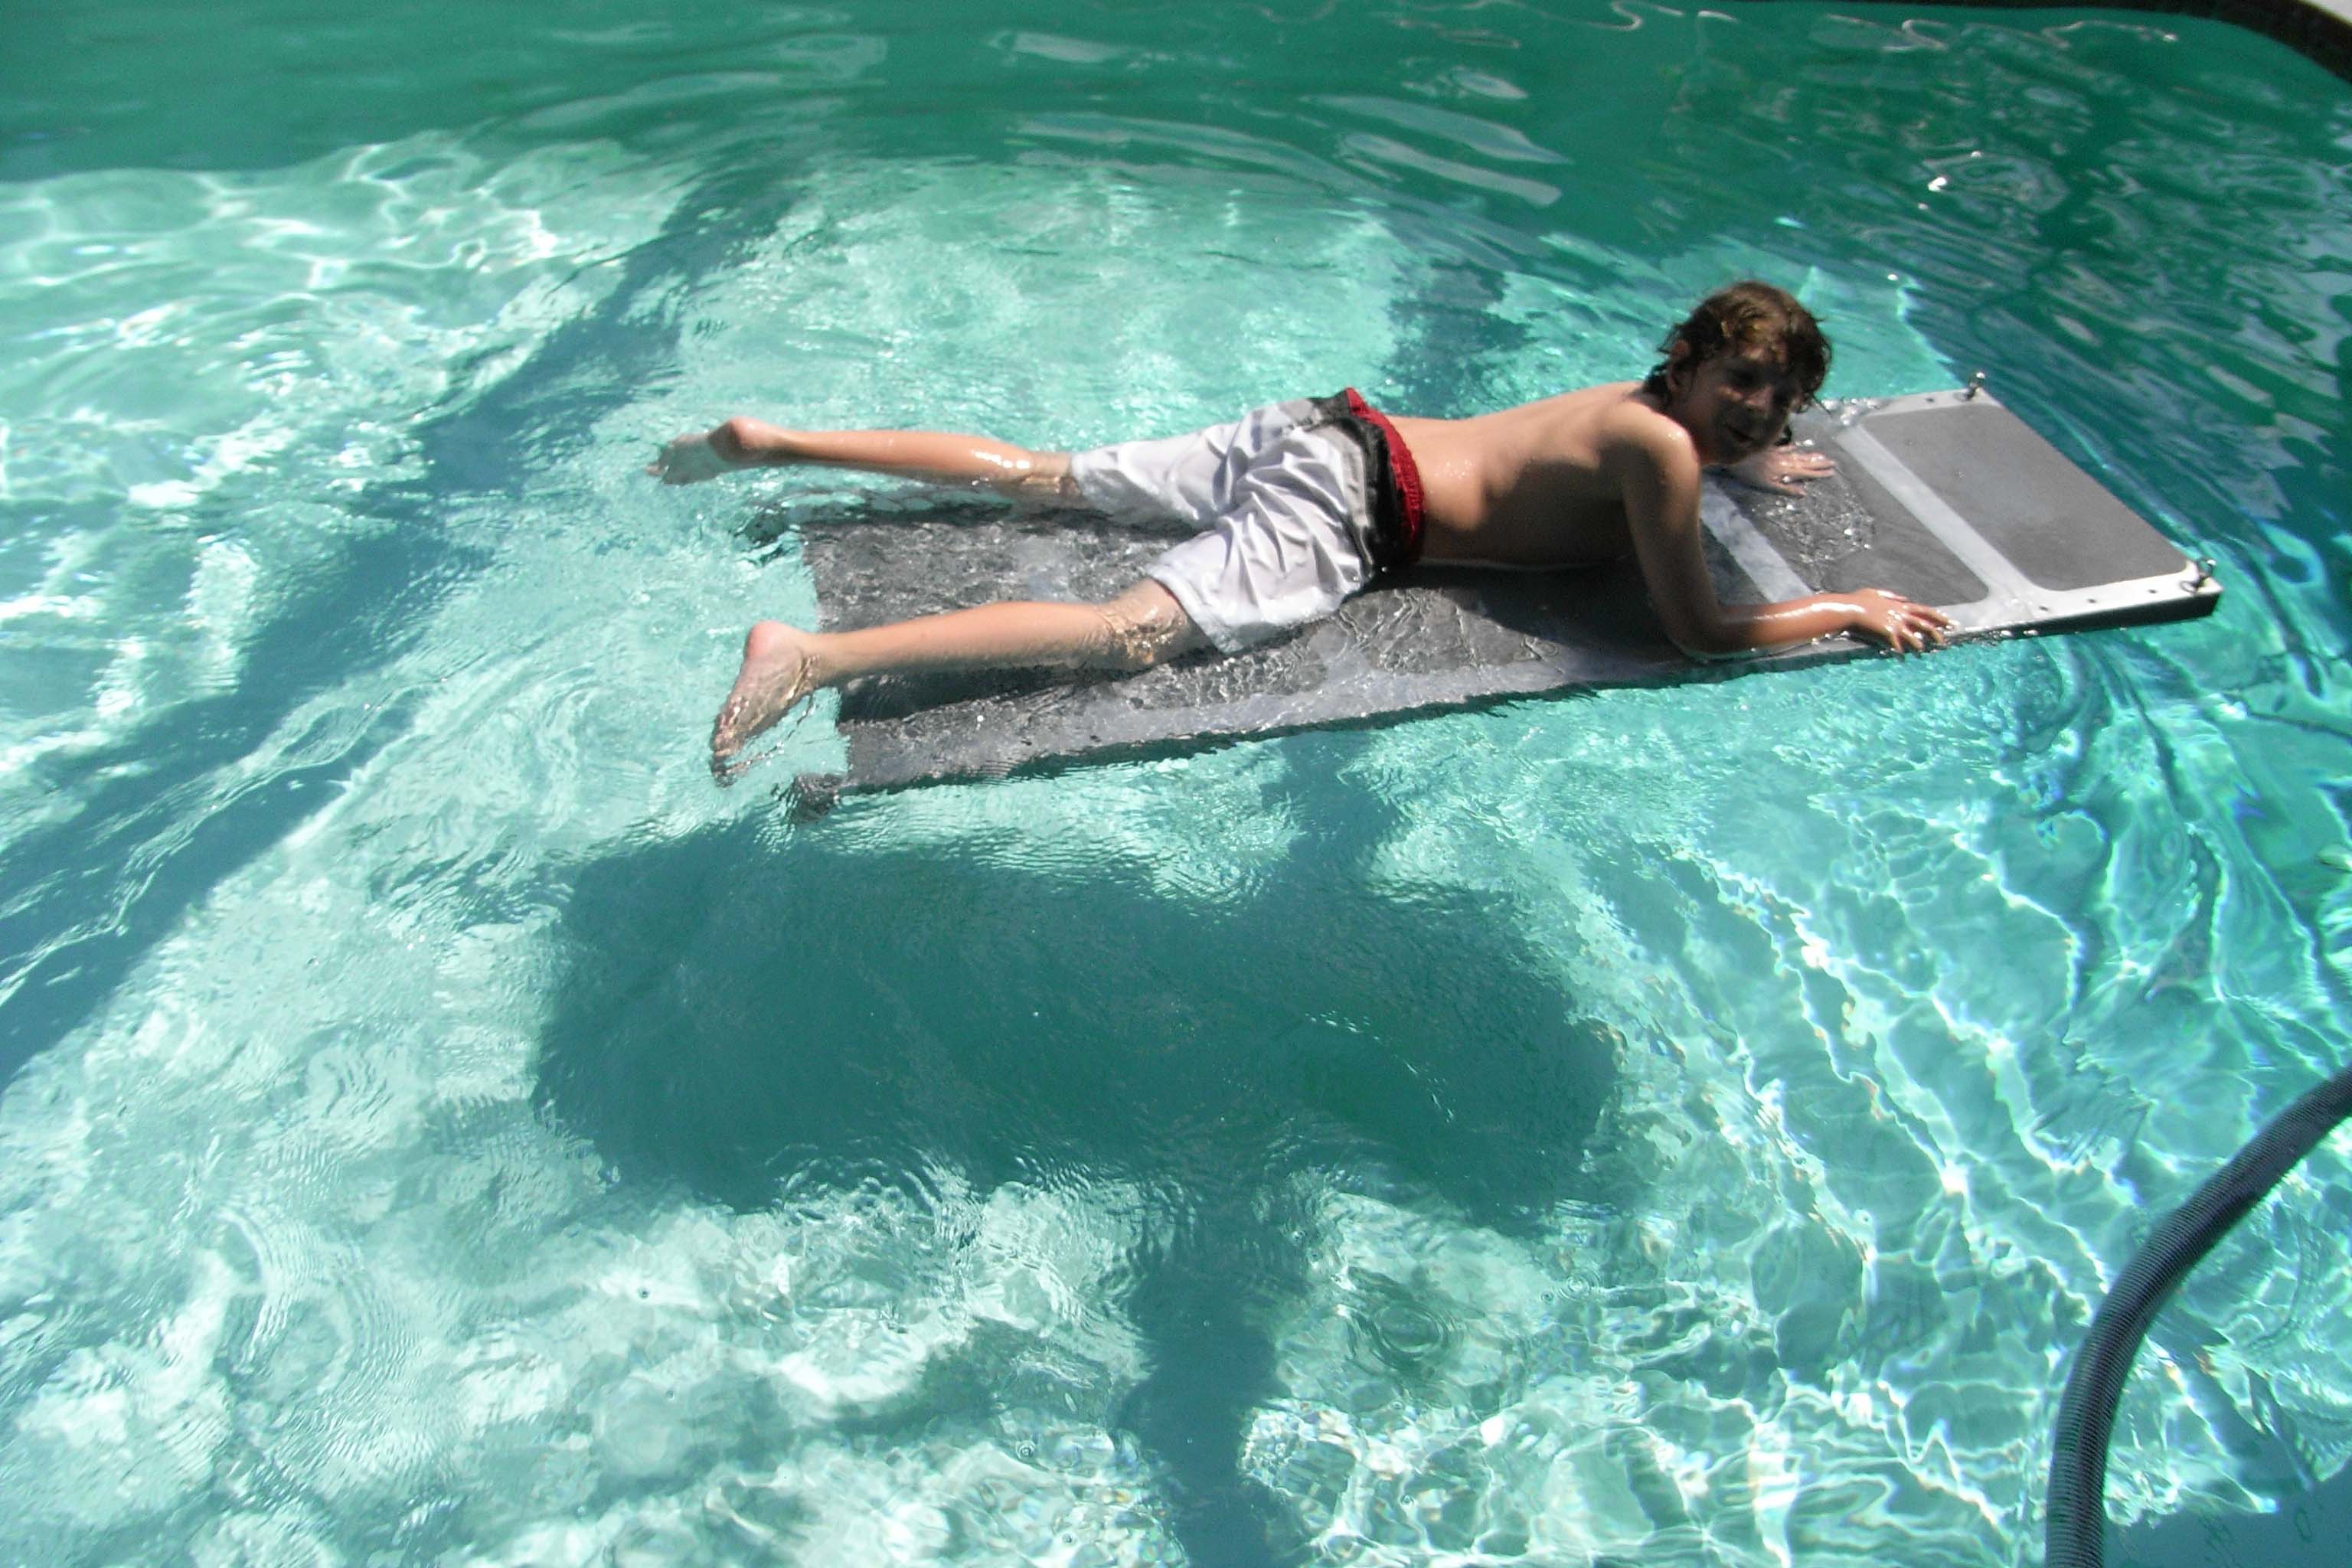 Jordan on ramp in water